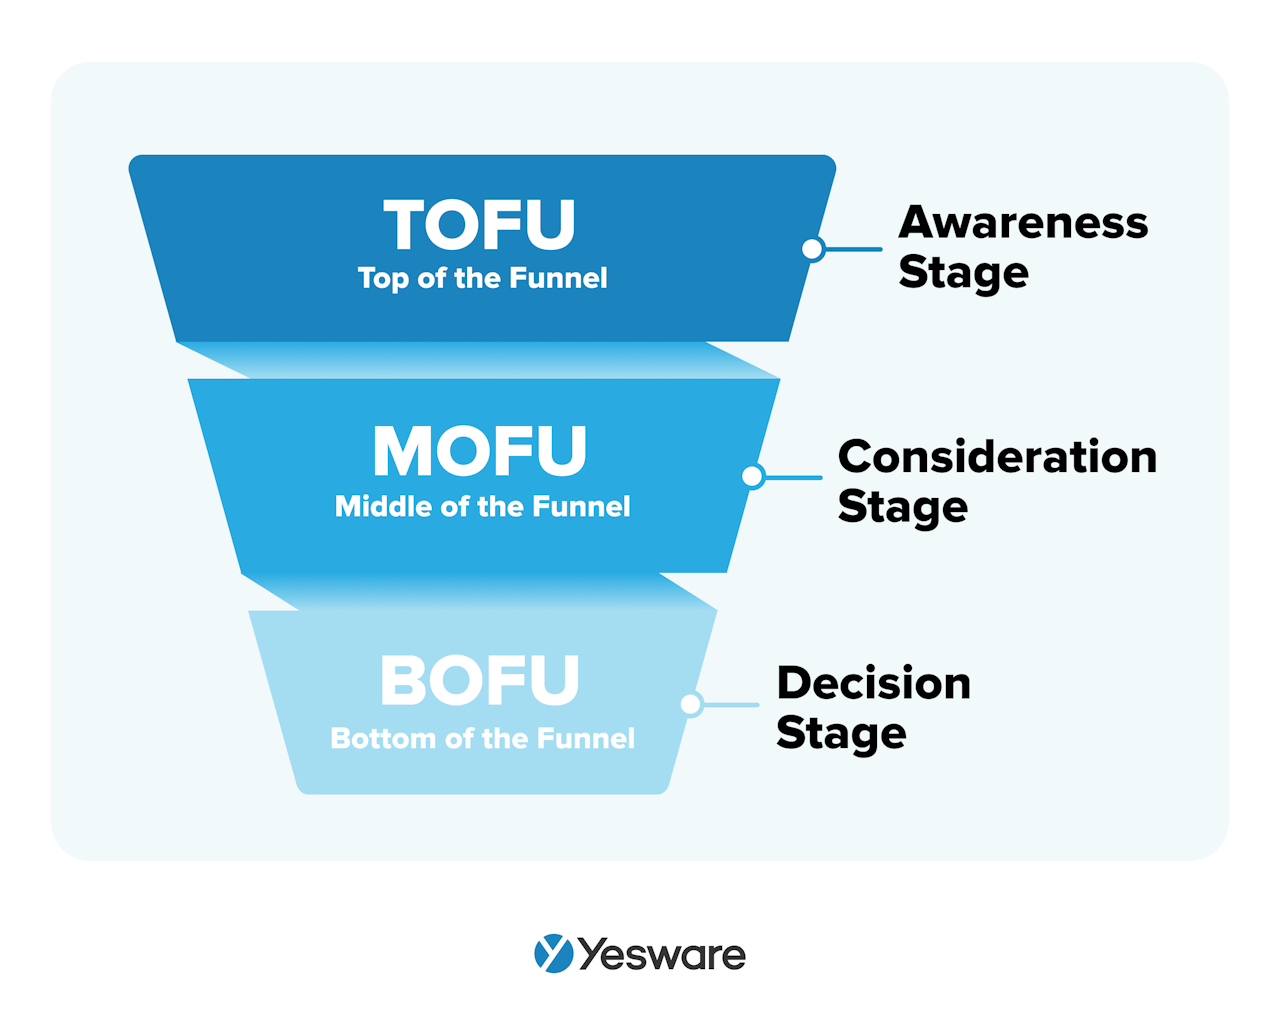 b2b sales funnel: TOFU, MOFU, BOFU